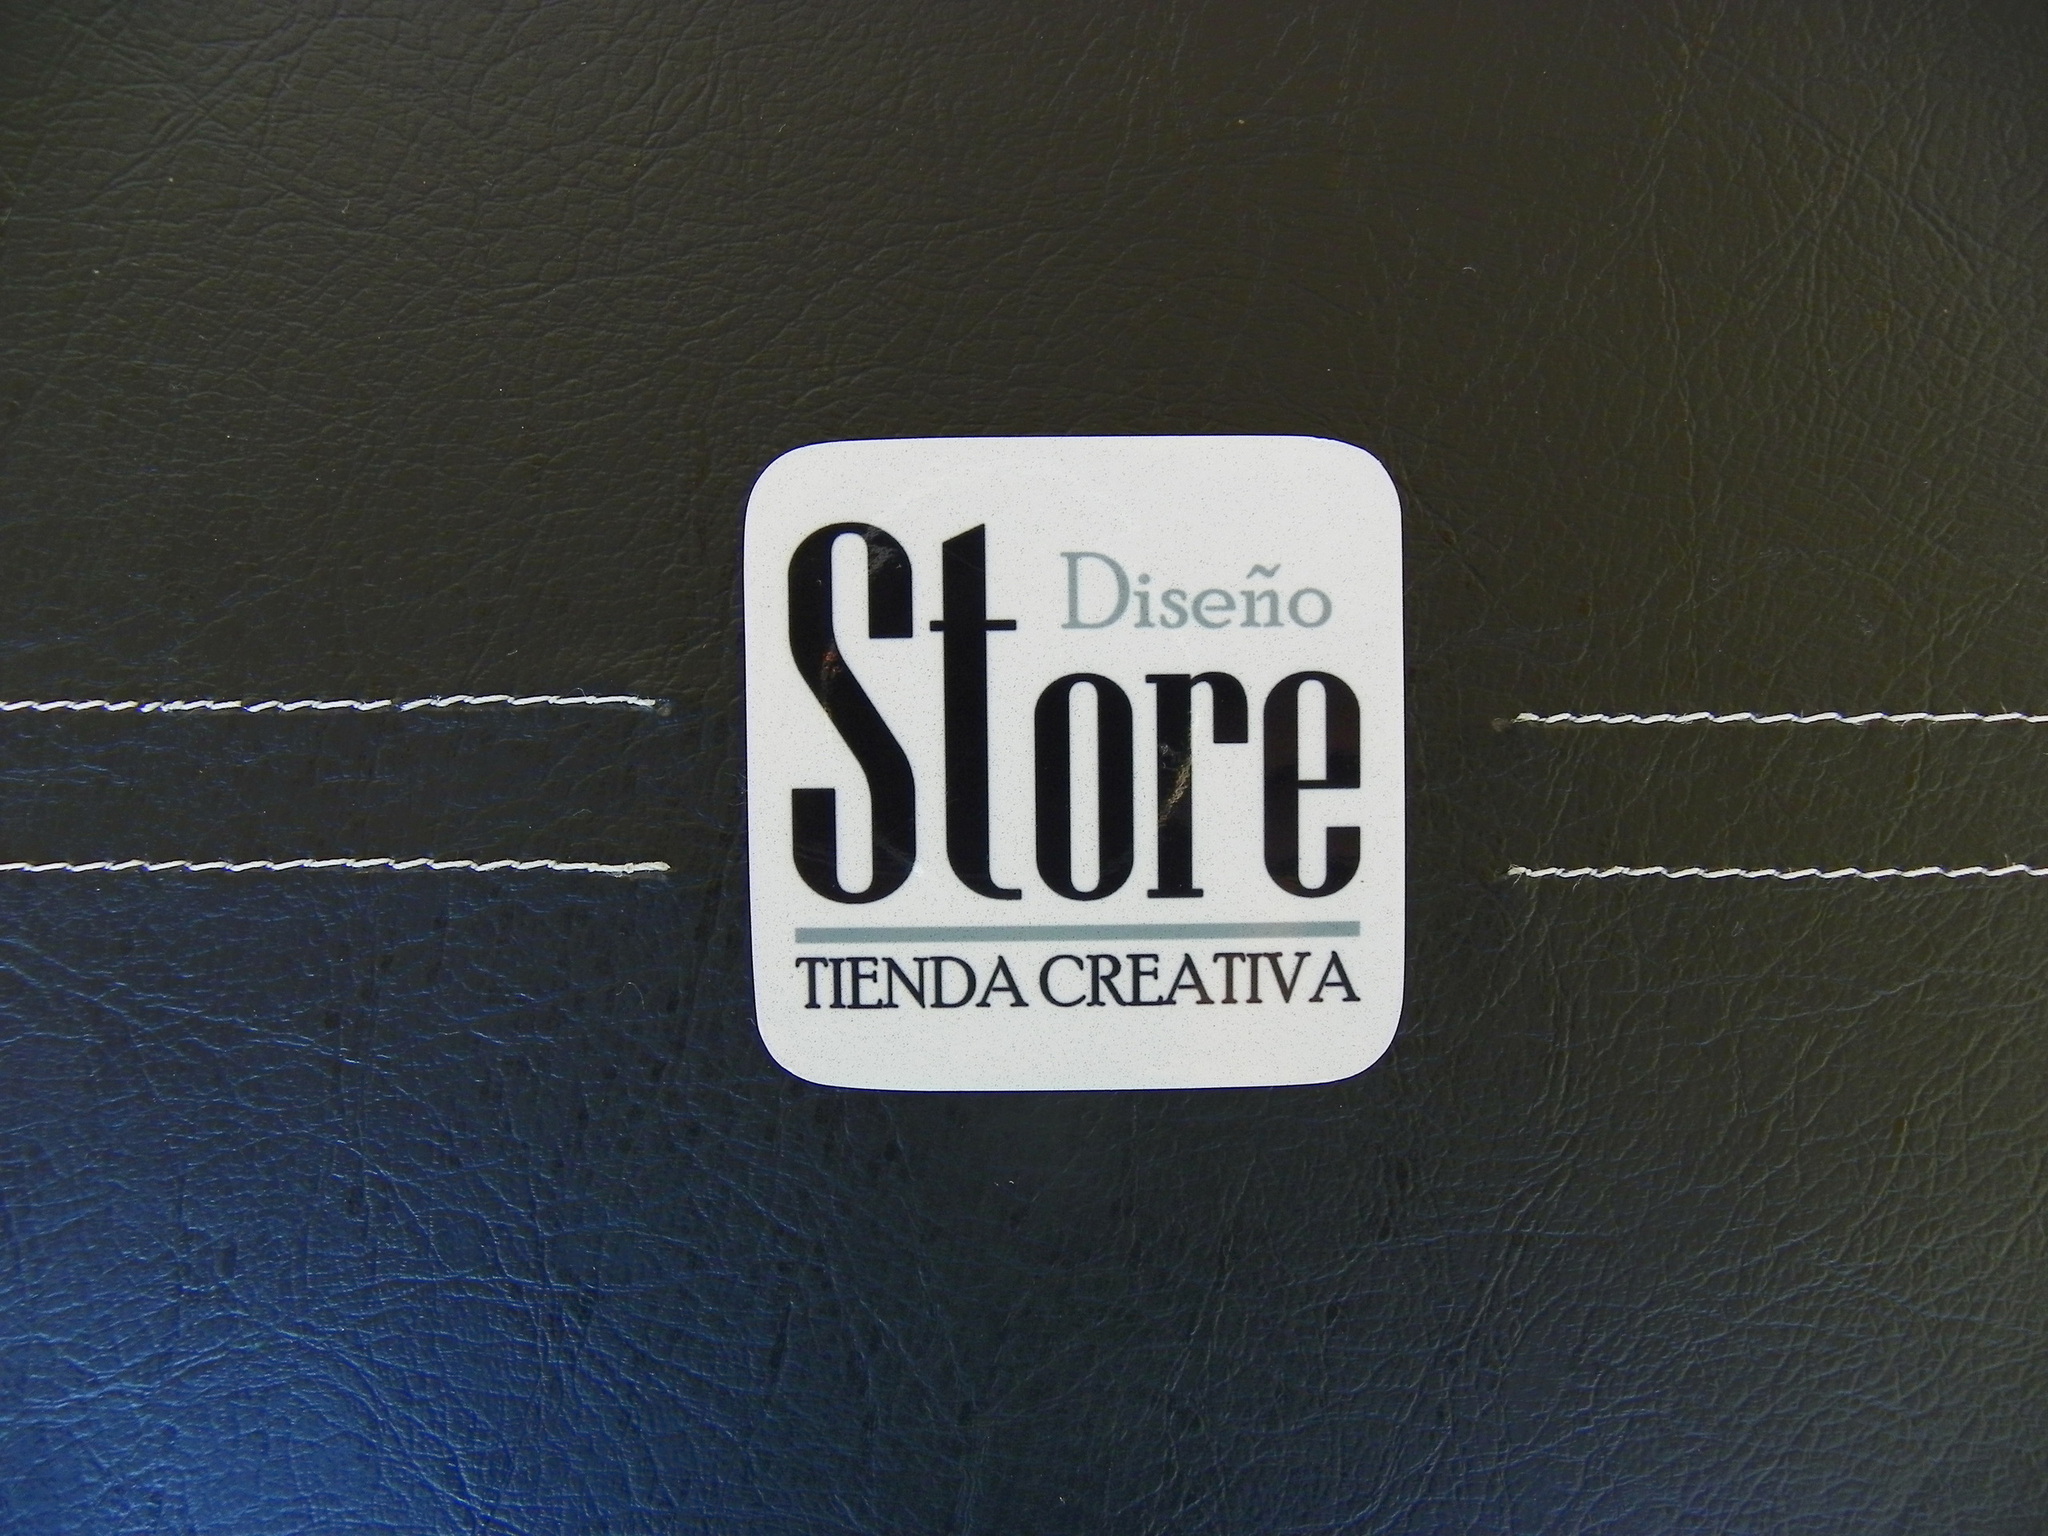 Diseño Store